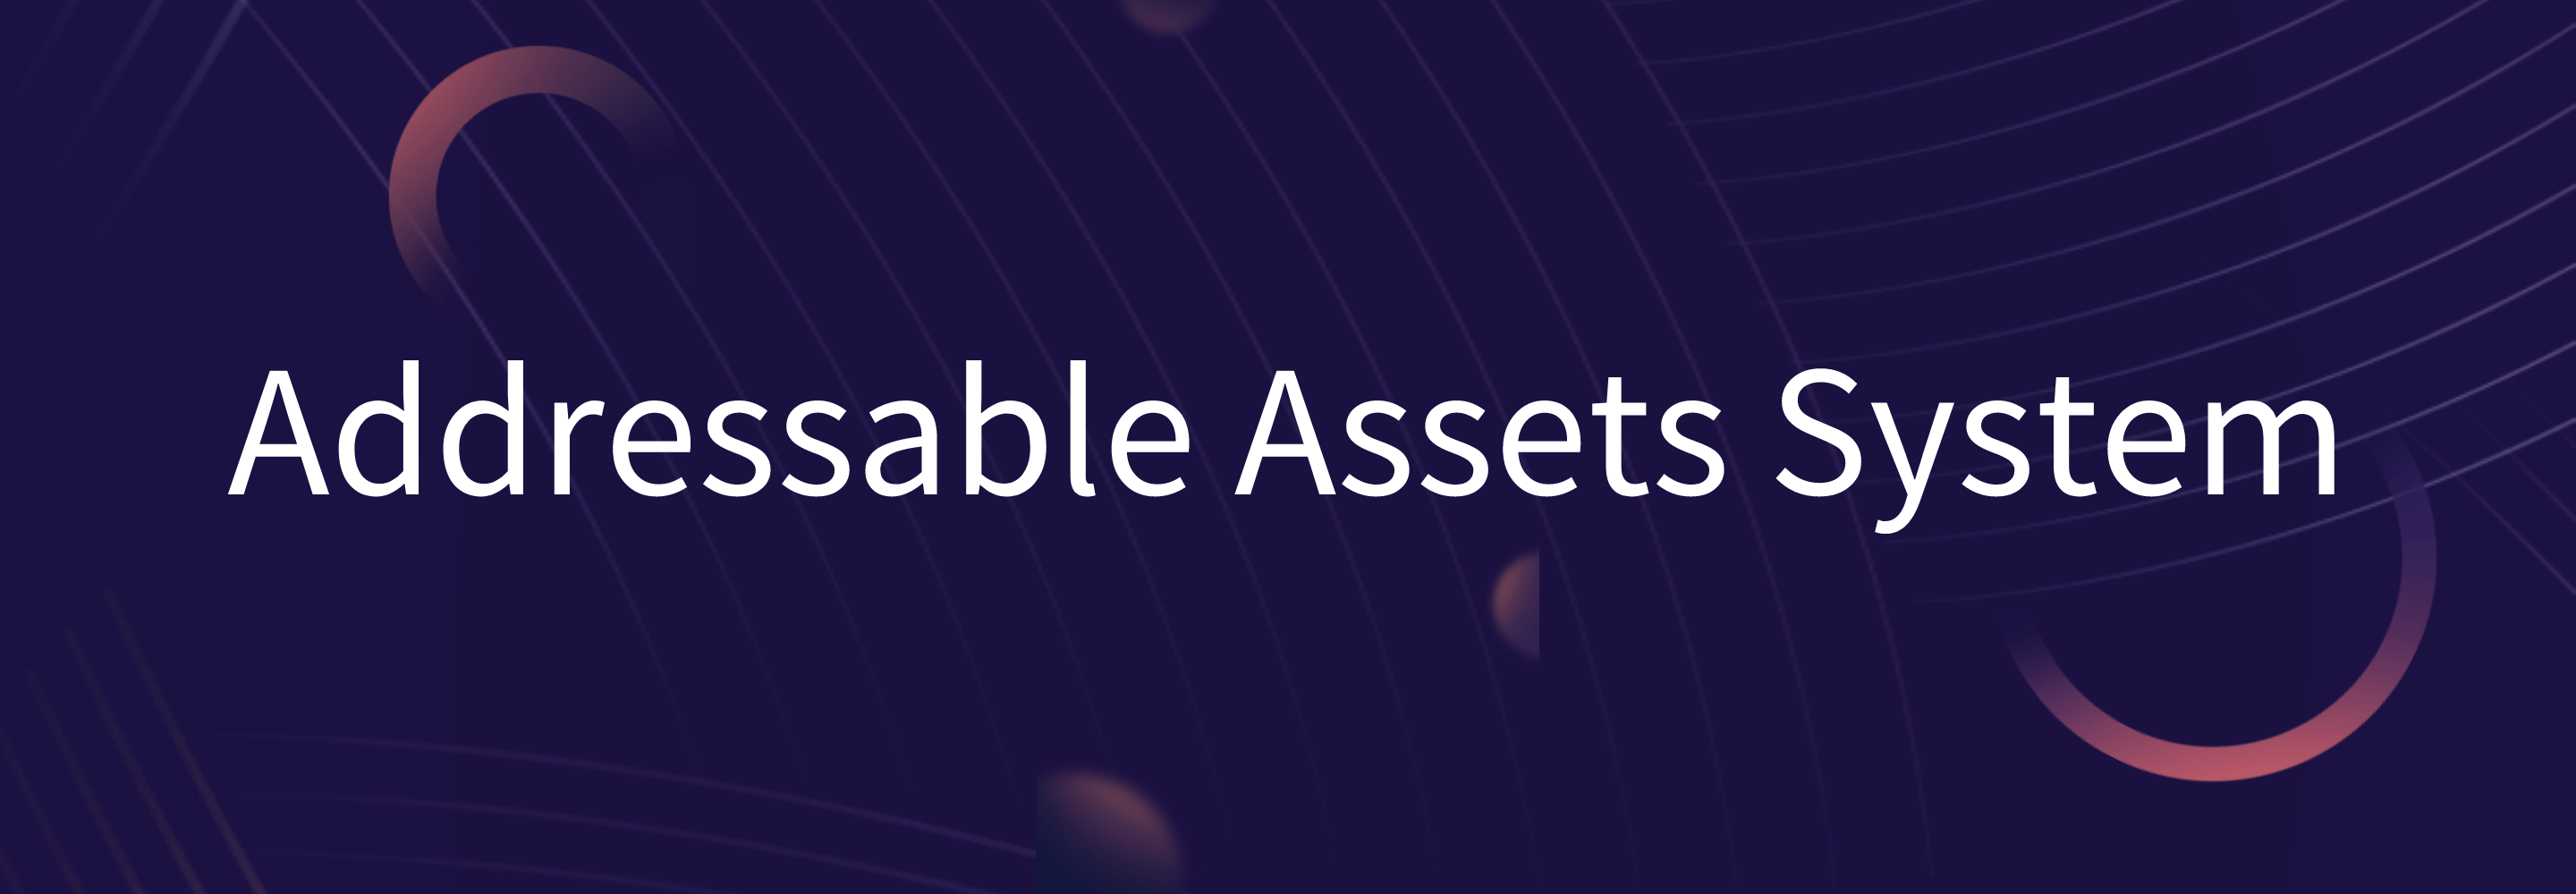 Addressable Assets System